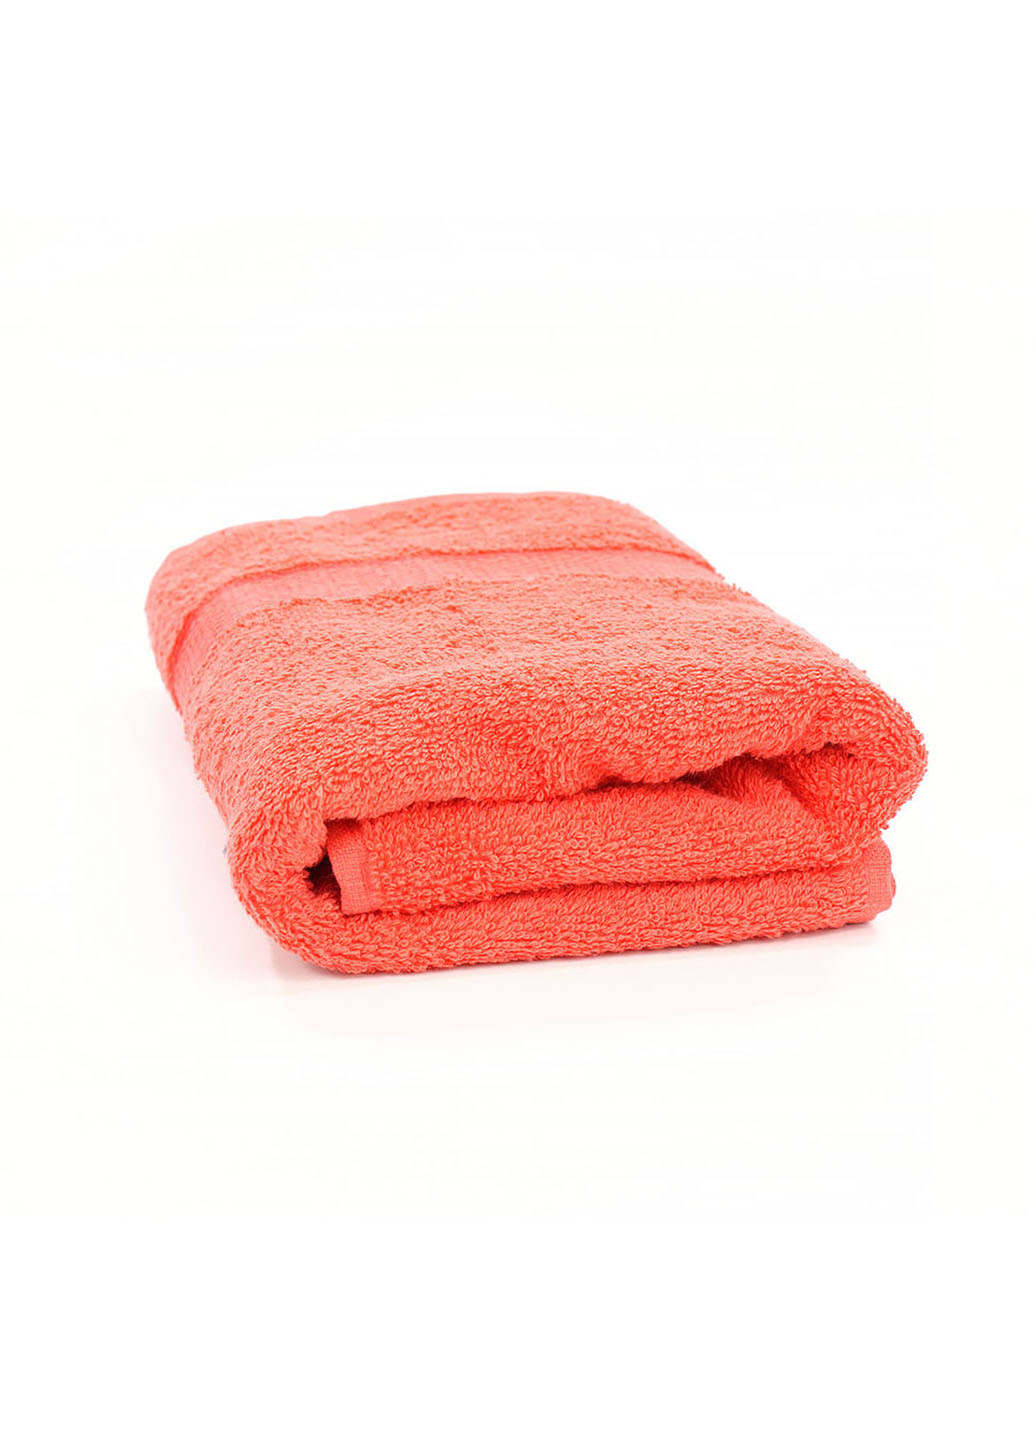 Еней-Плюс полотенце махровое бс0022 50х90 розовый производство - Украина